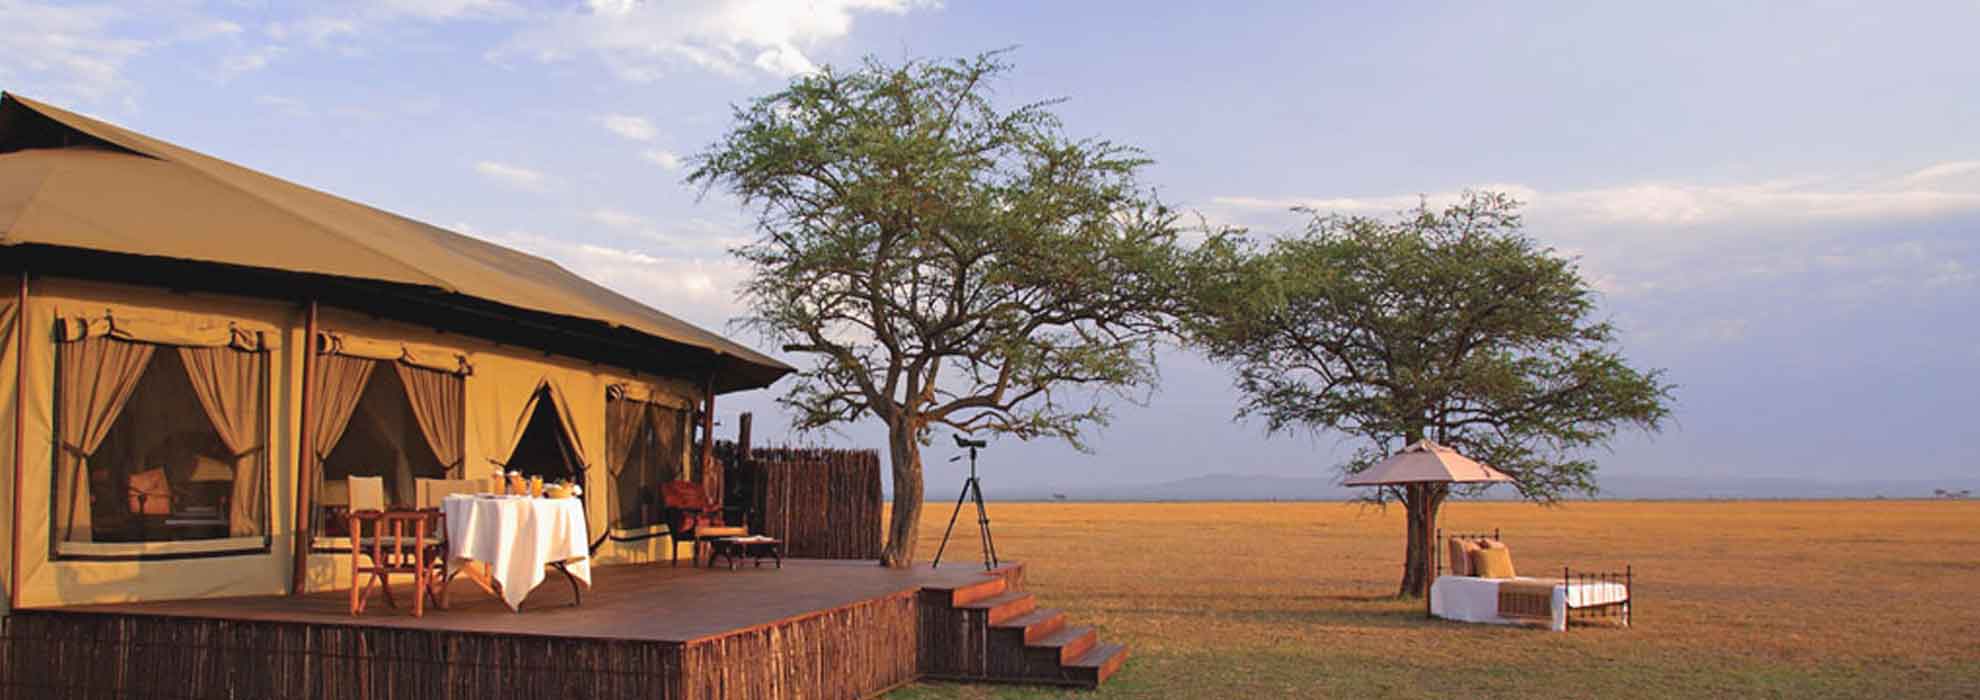 Tanzania Budget Camping Safari  